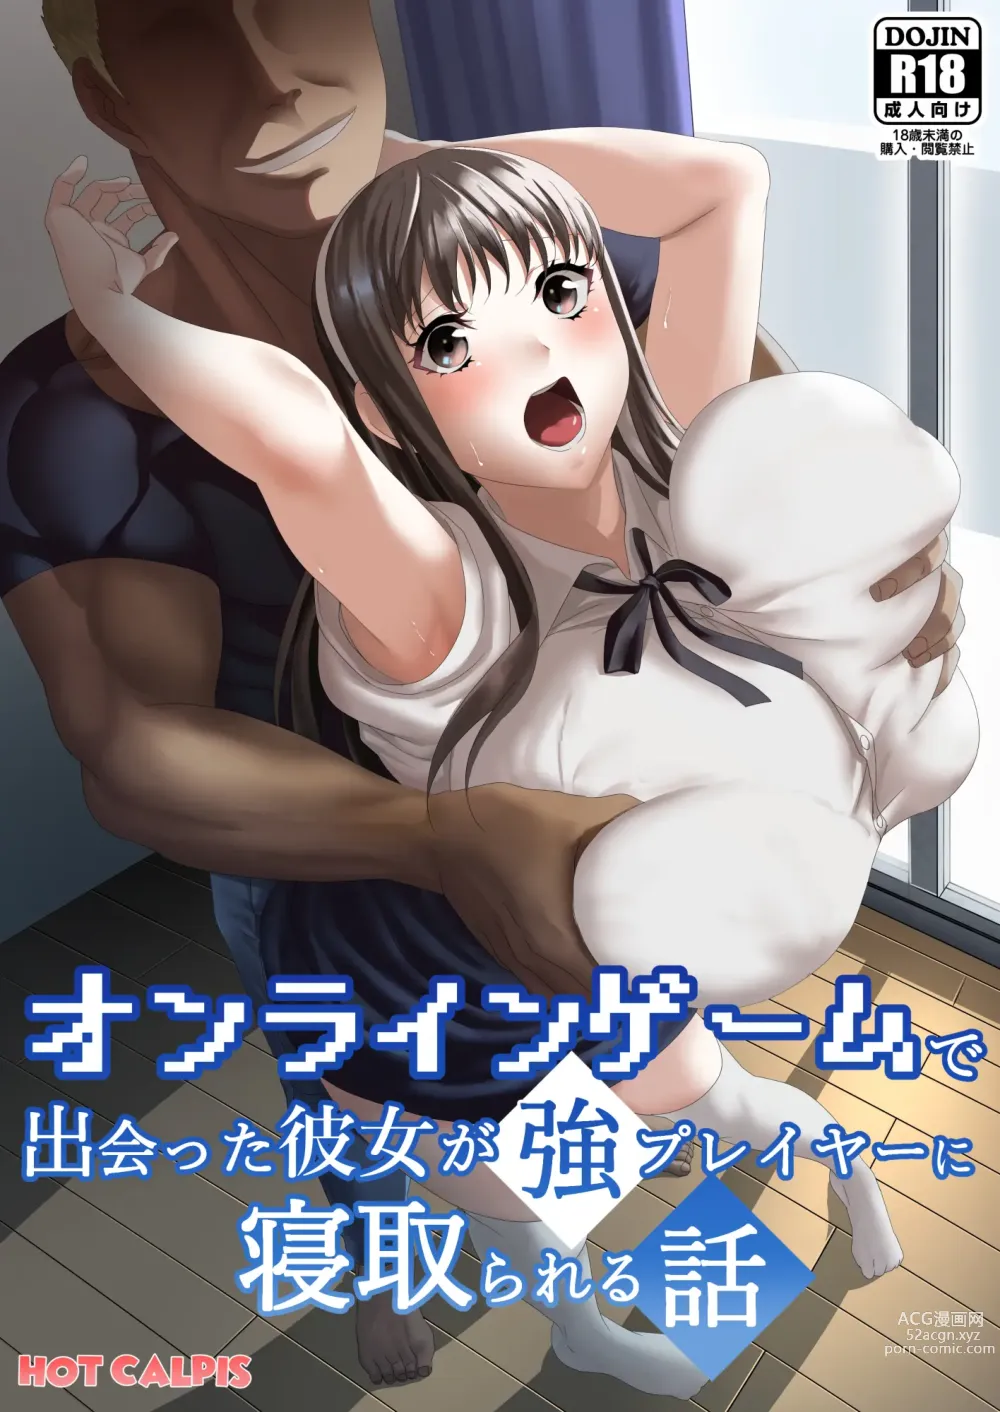 Page 1 of doujinshi 온라인 게임에서 만난 여친이 고렙한테 네토라레당하는 이야기